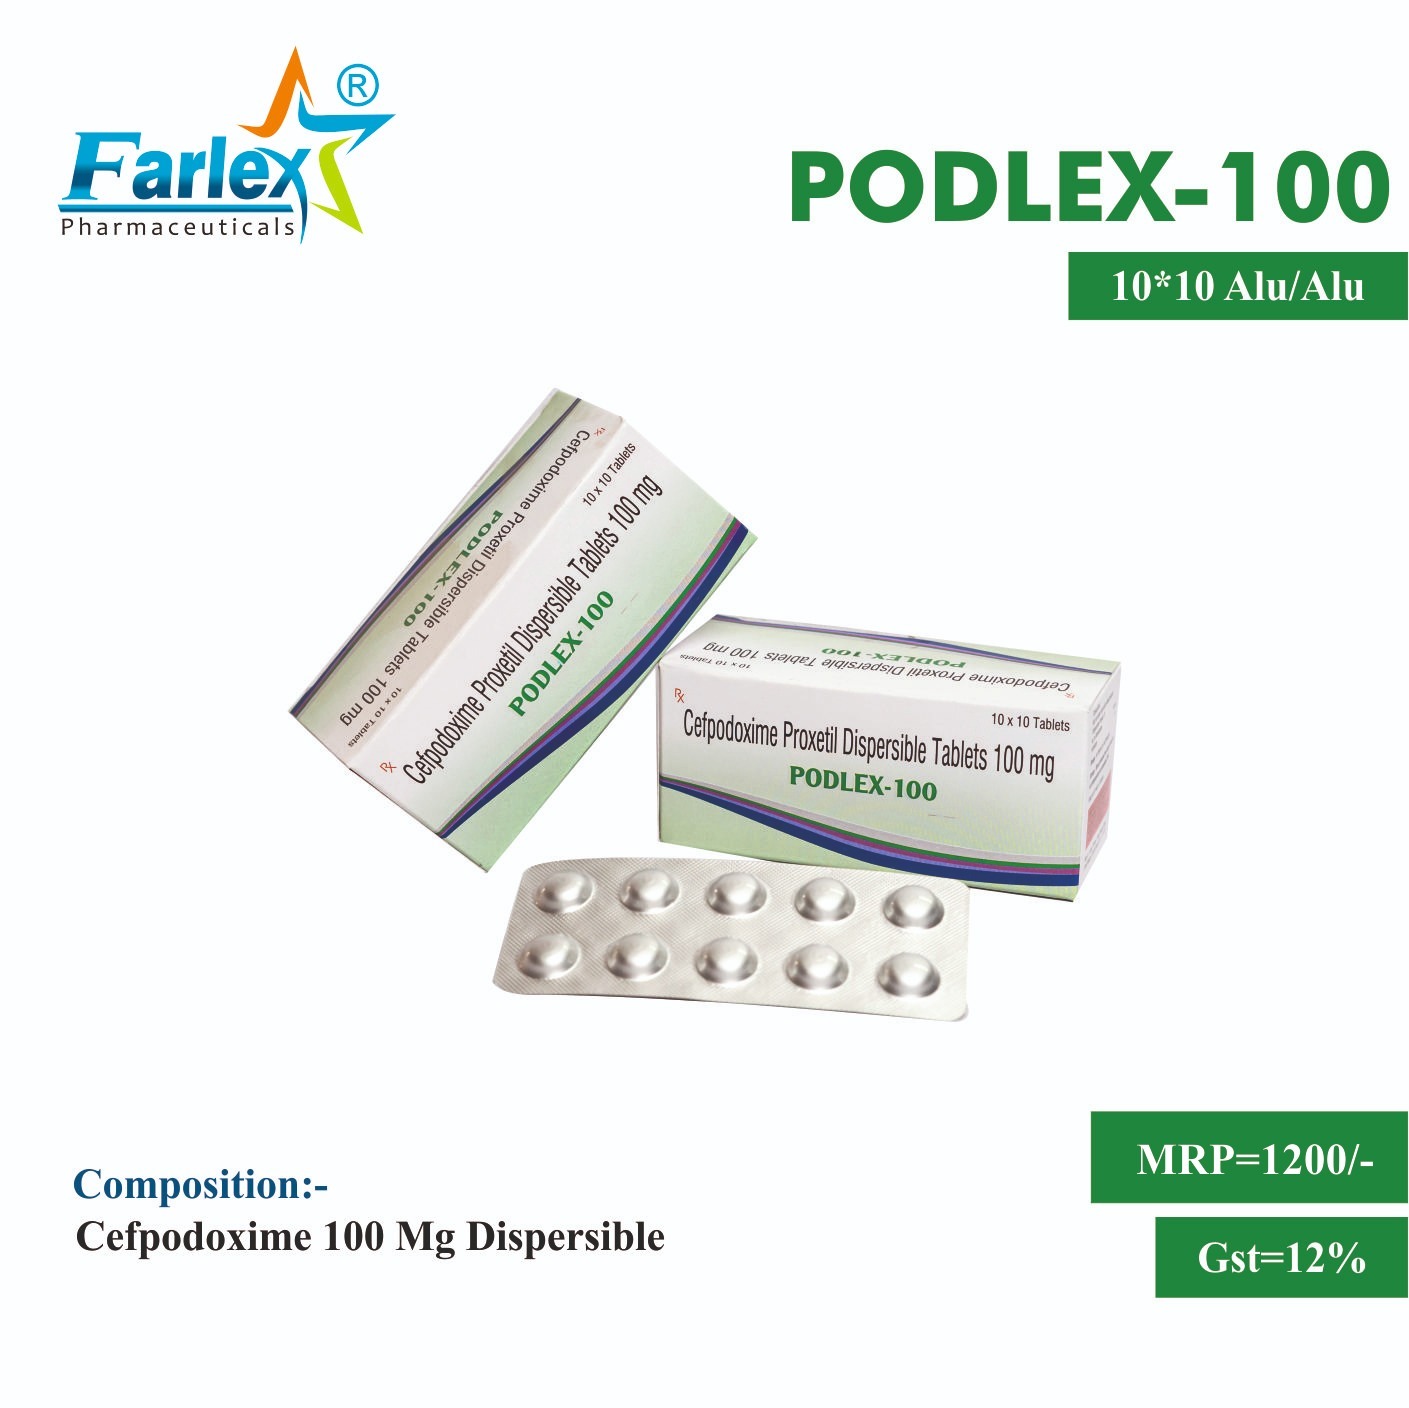 PODLEX-100